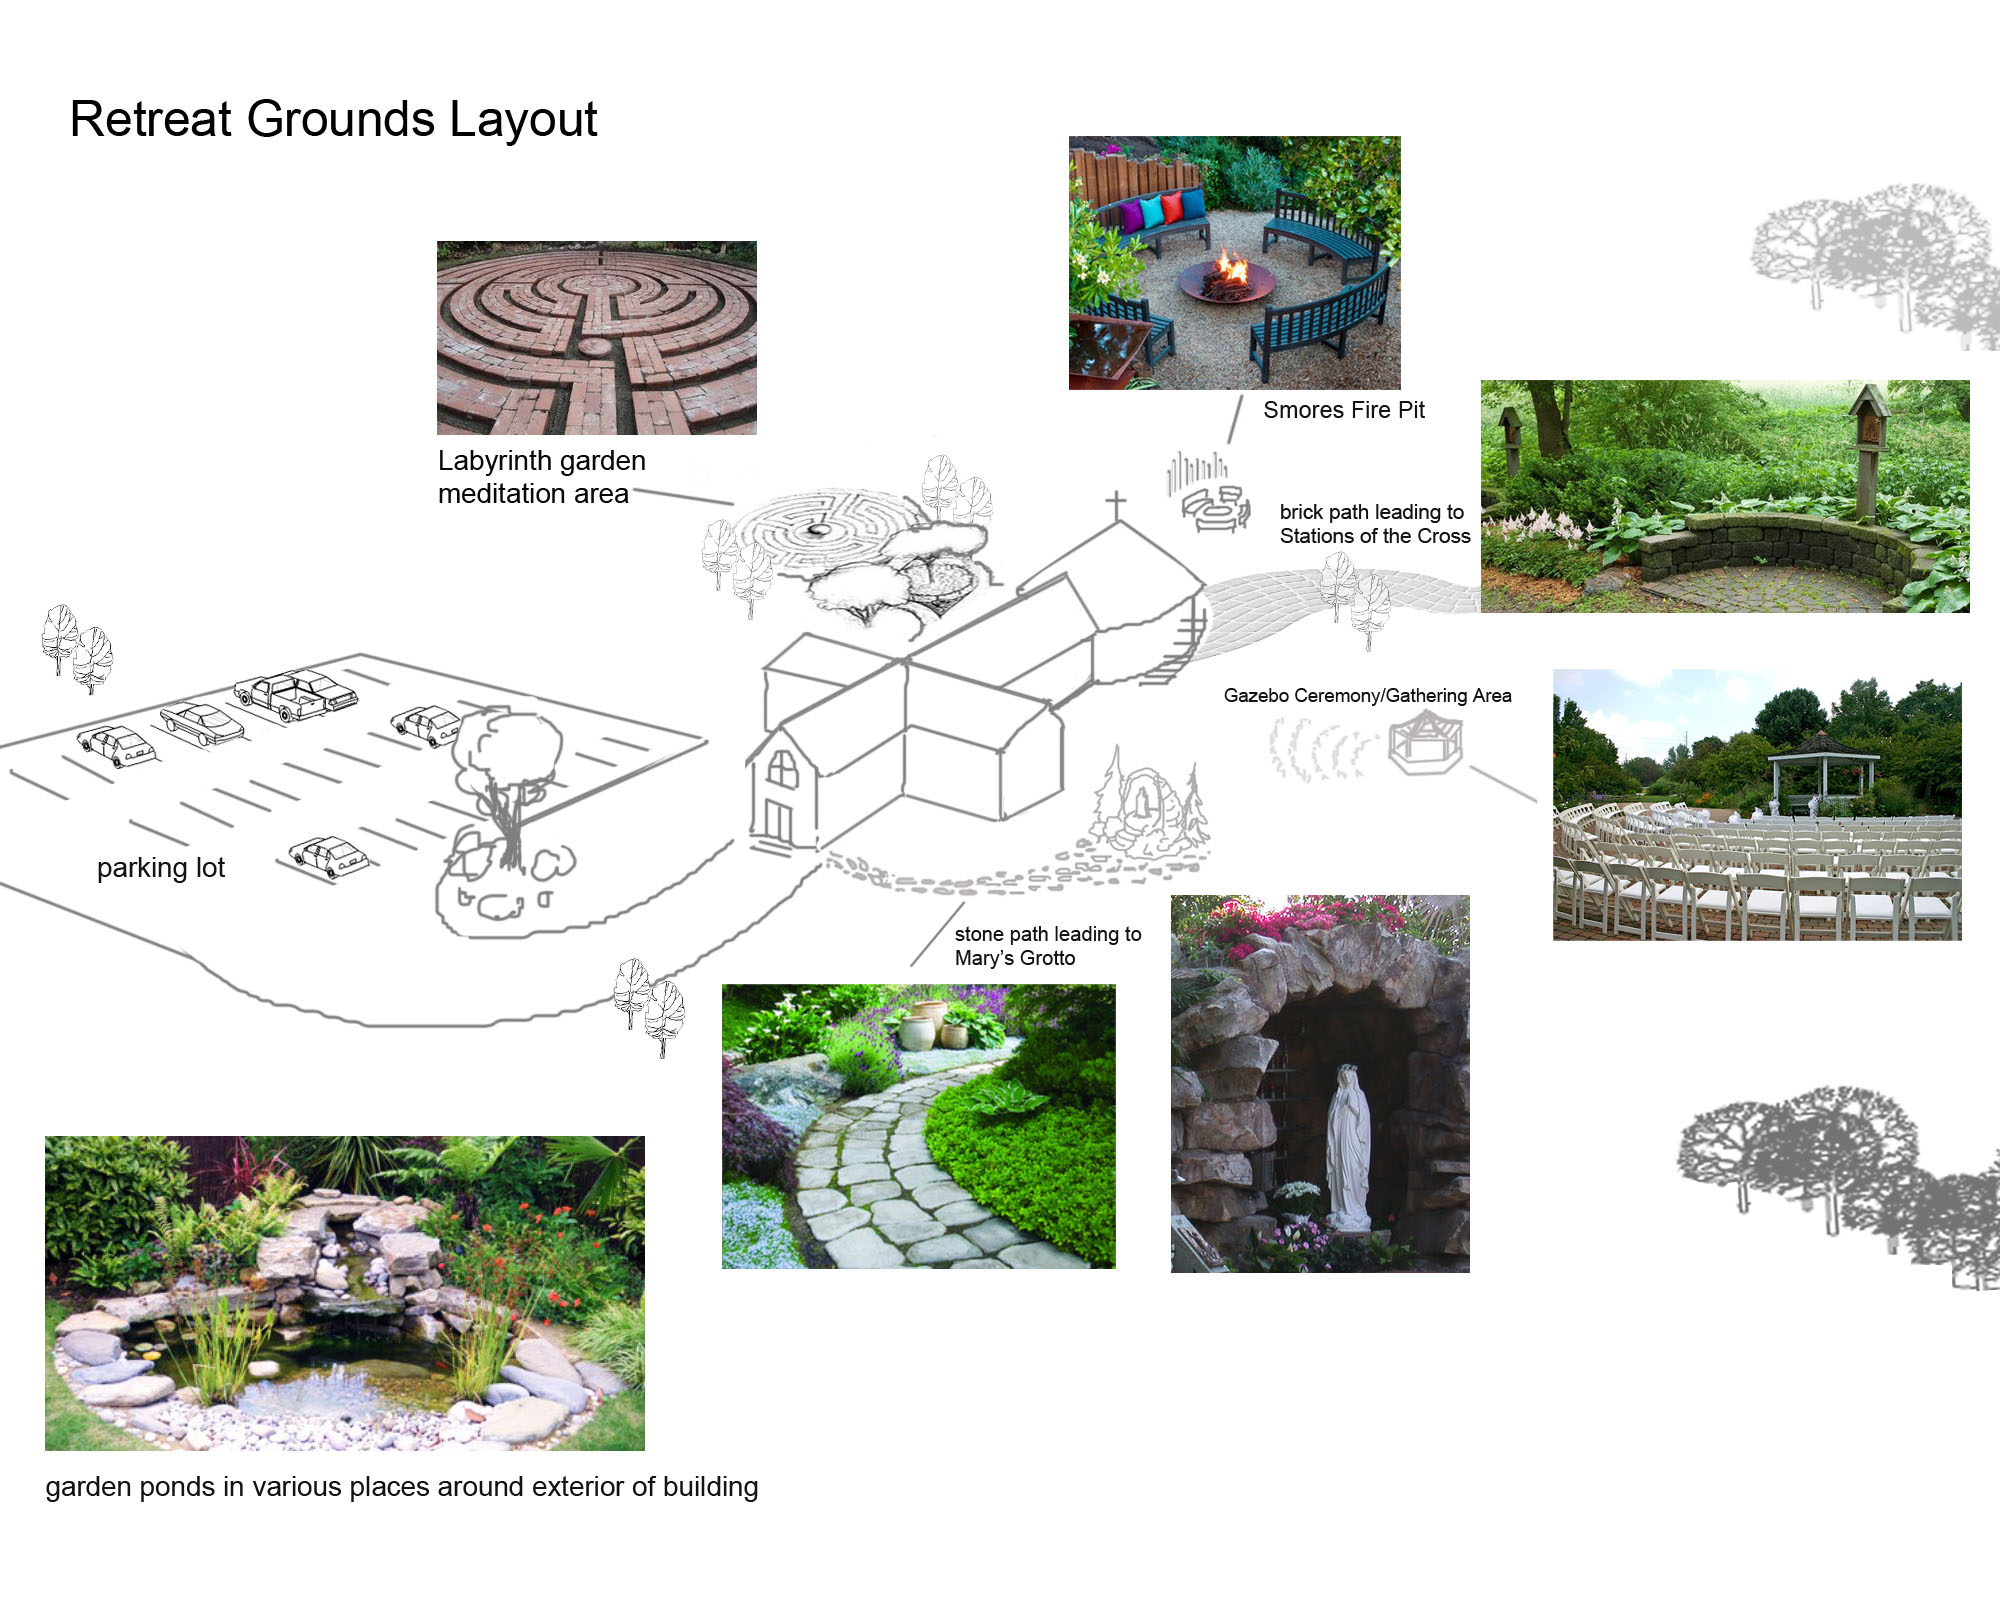 Retreat Building Design (grounds layout)